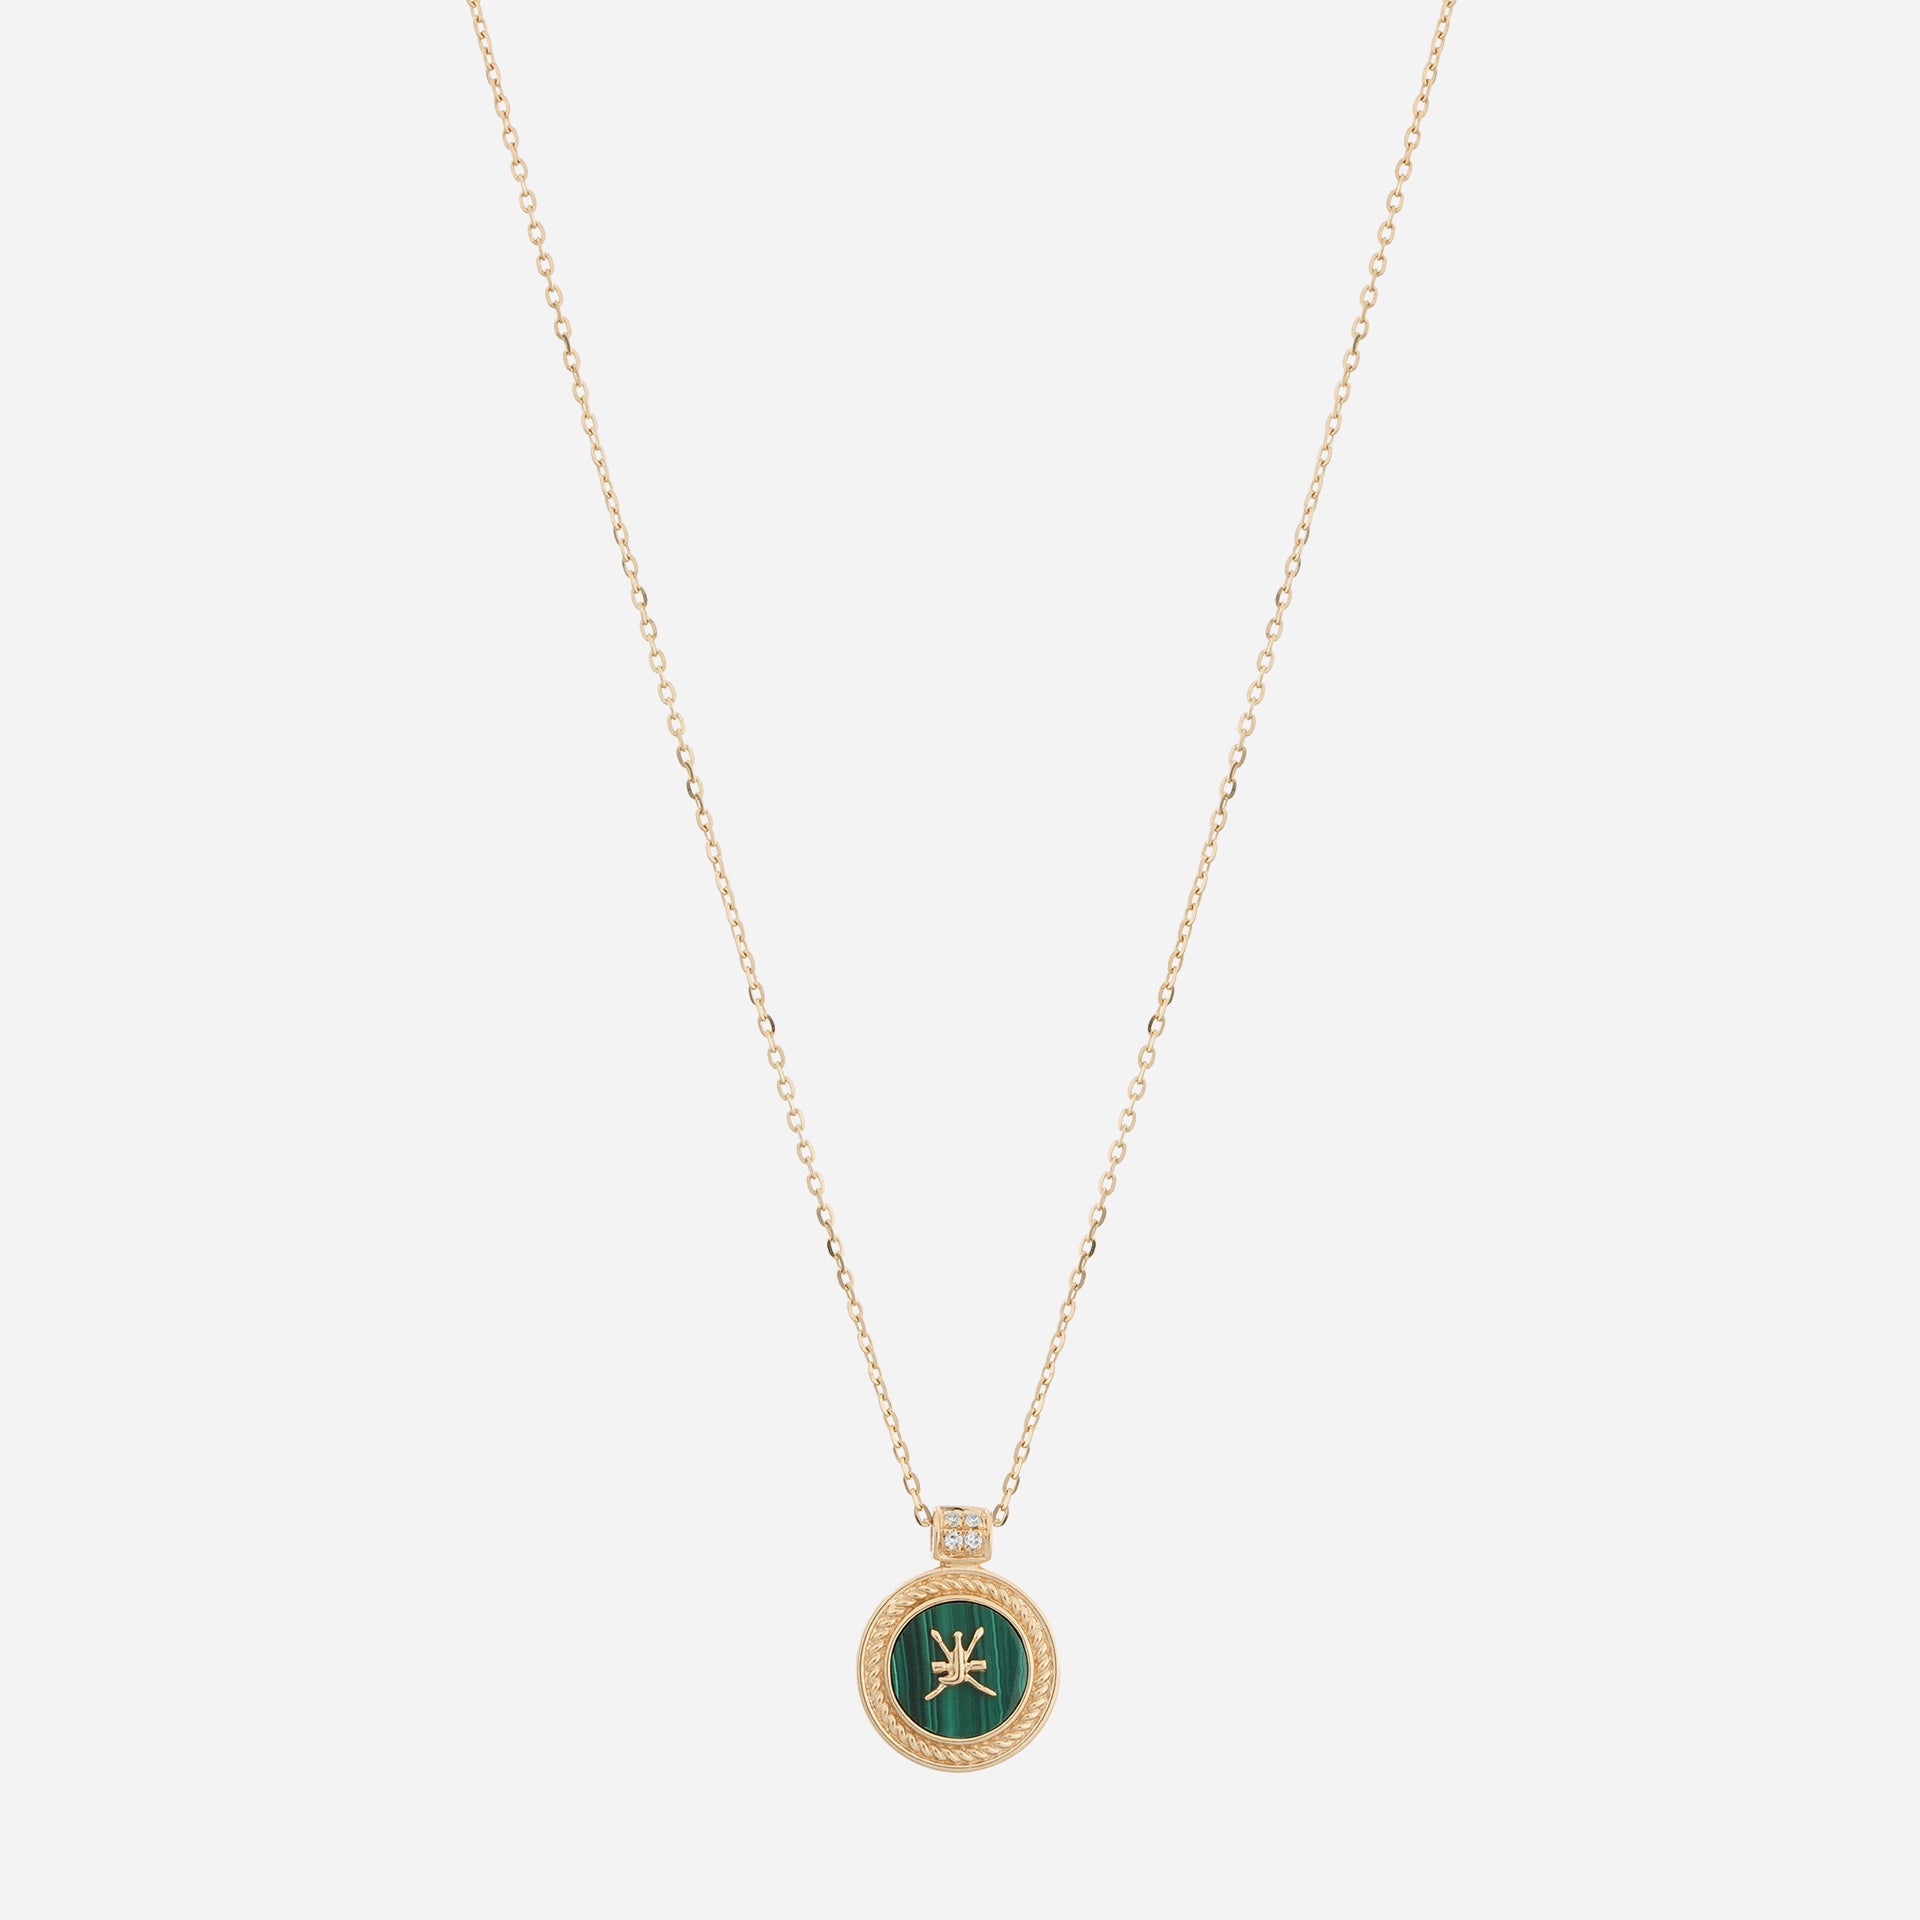 Oman Necklace in 18k yellow gold with Malachite Stone and Diamonds - Al Zain Jewellery